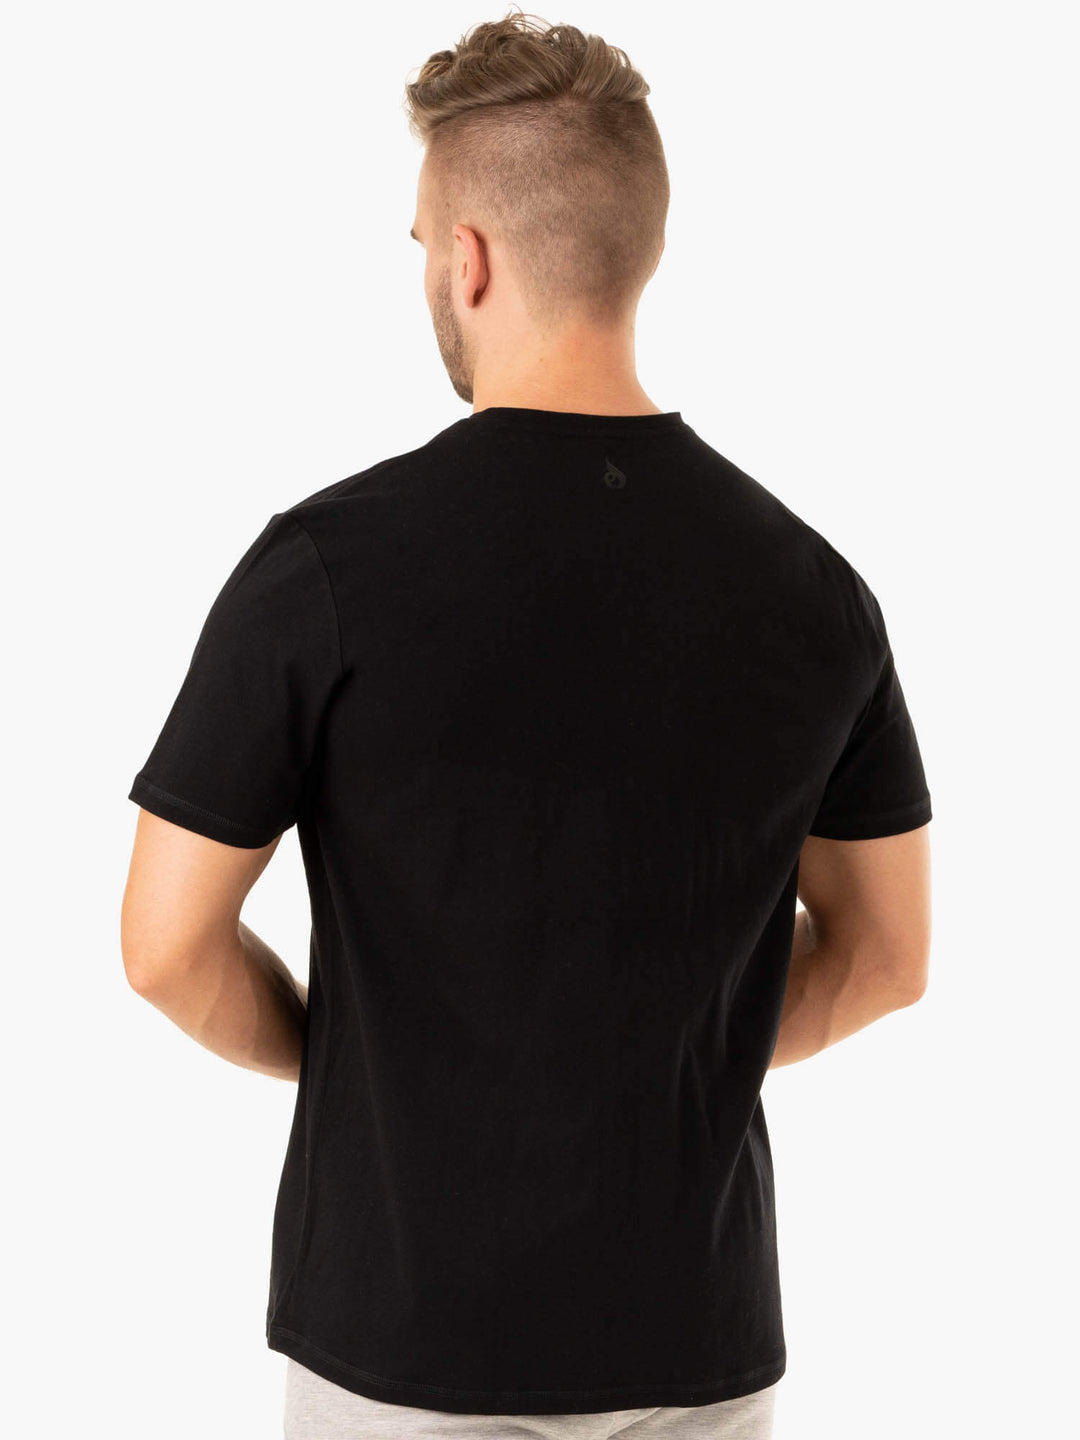 Limitless T-Shirt - Black Clothing Ryderwear 